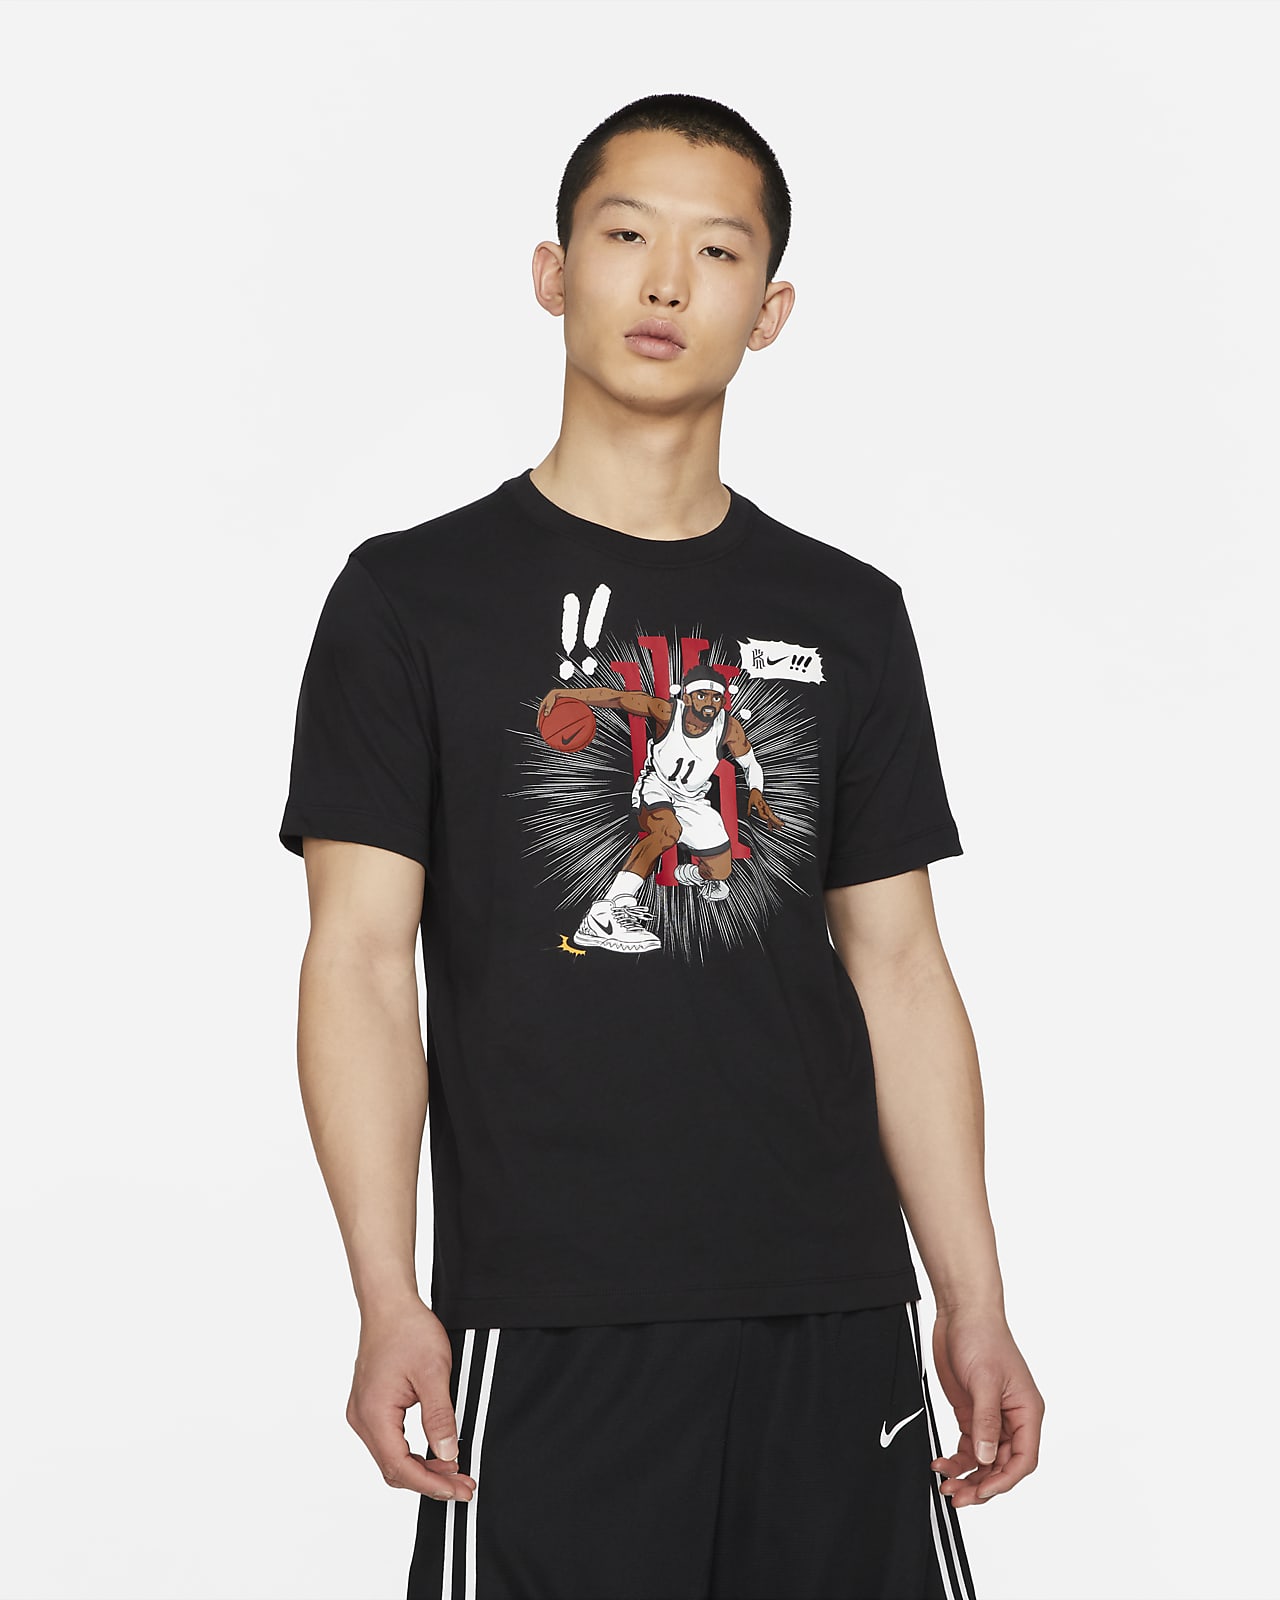 Basketball T-Shirt. Nike JP